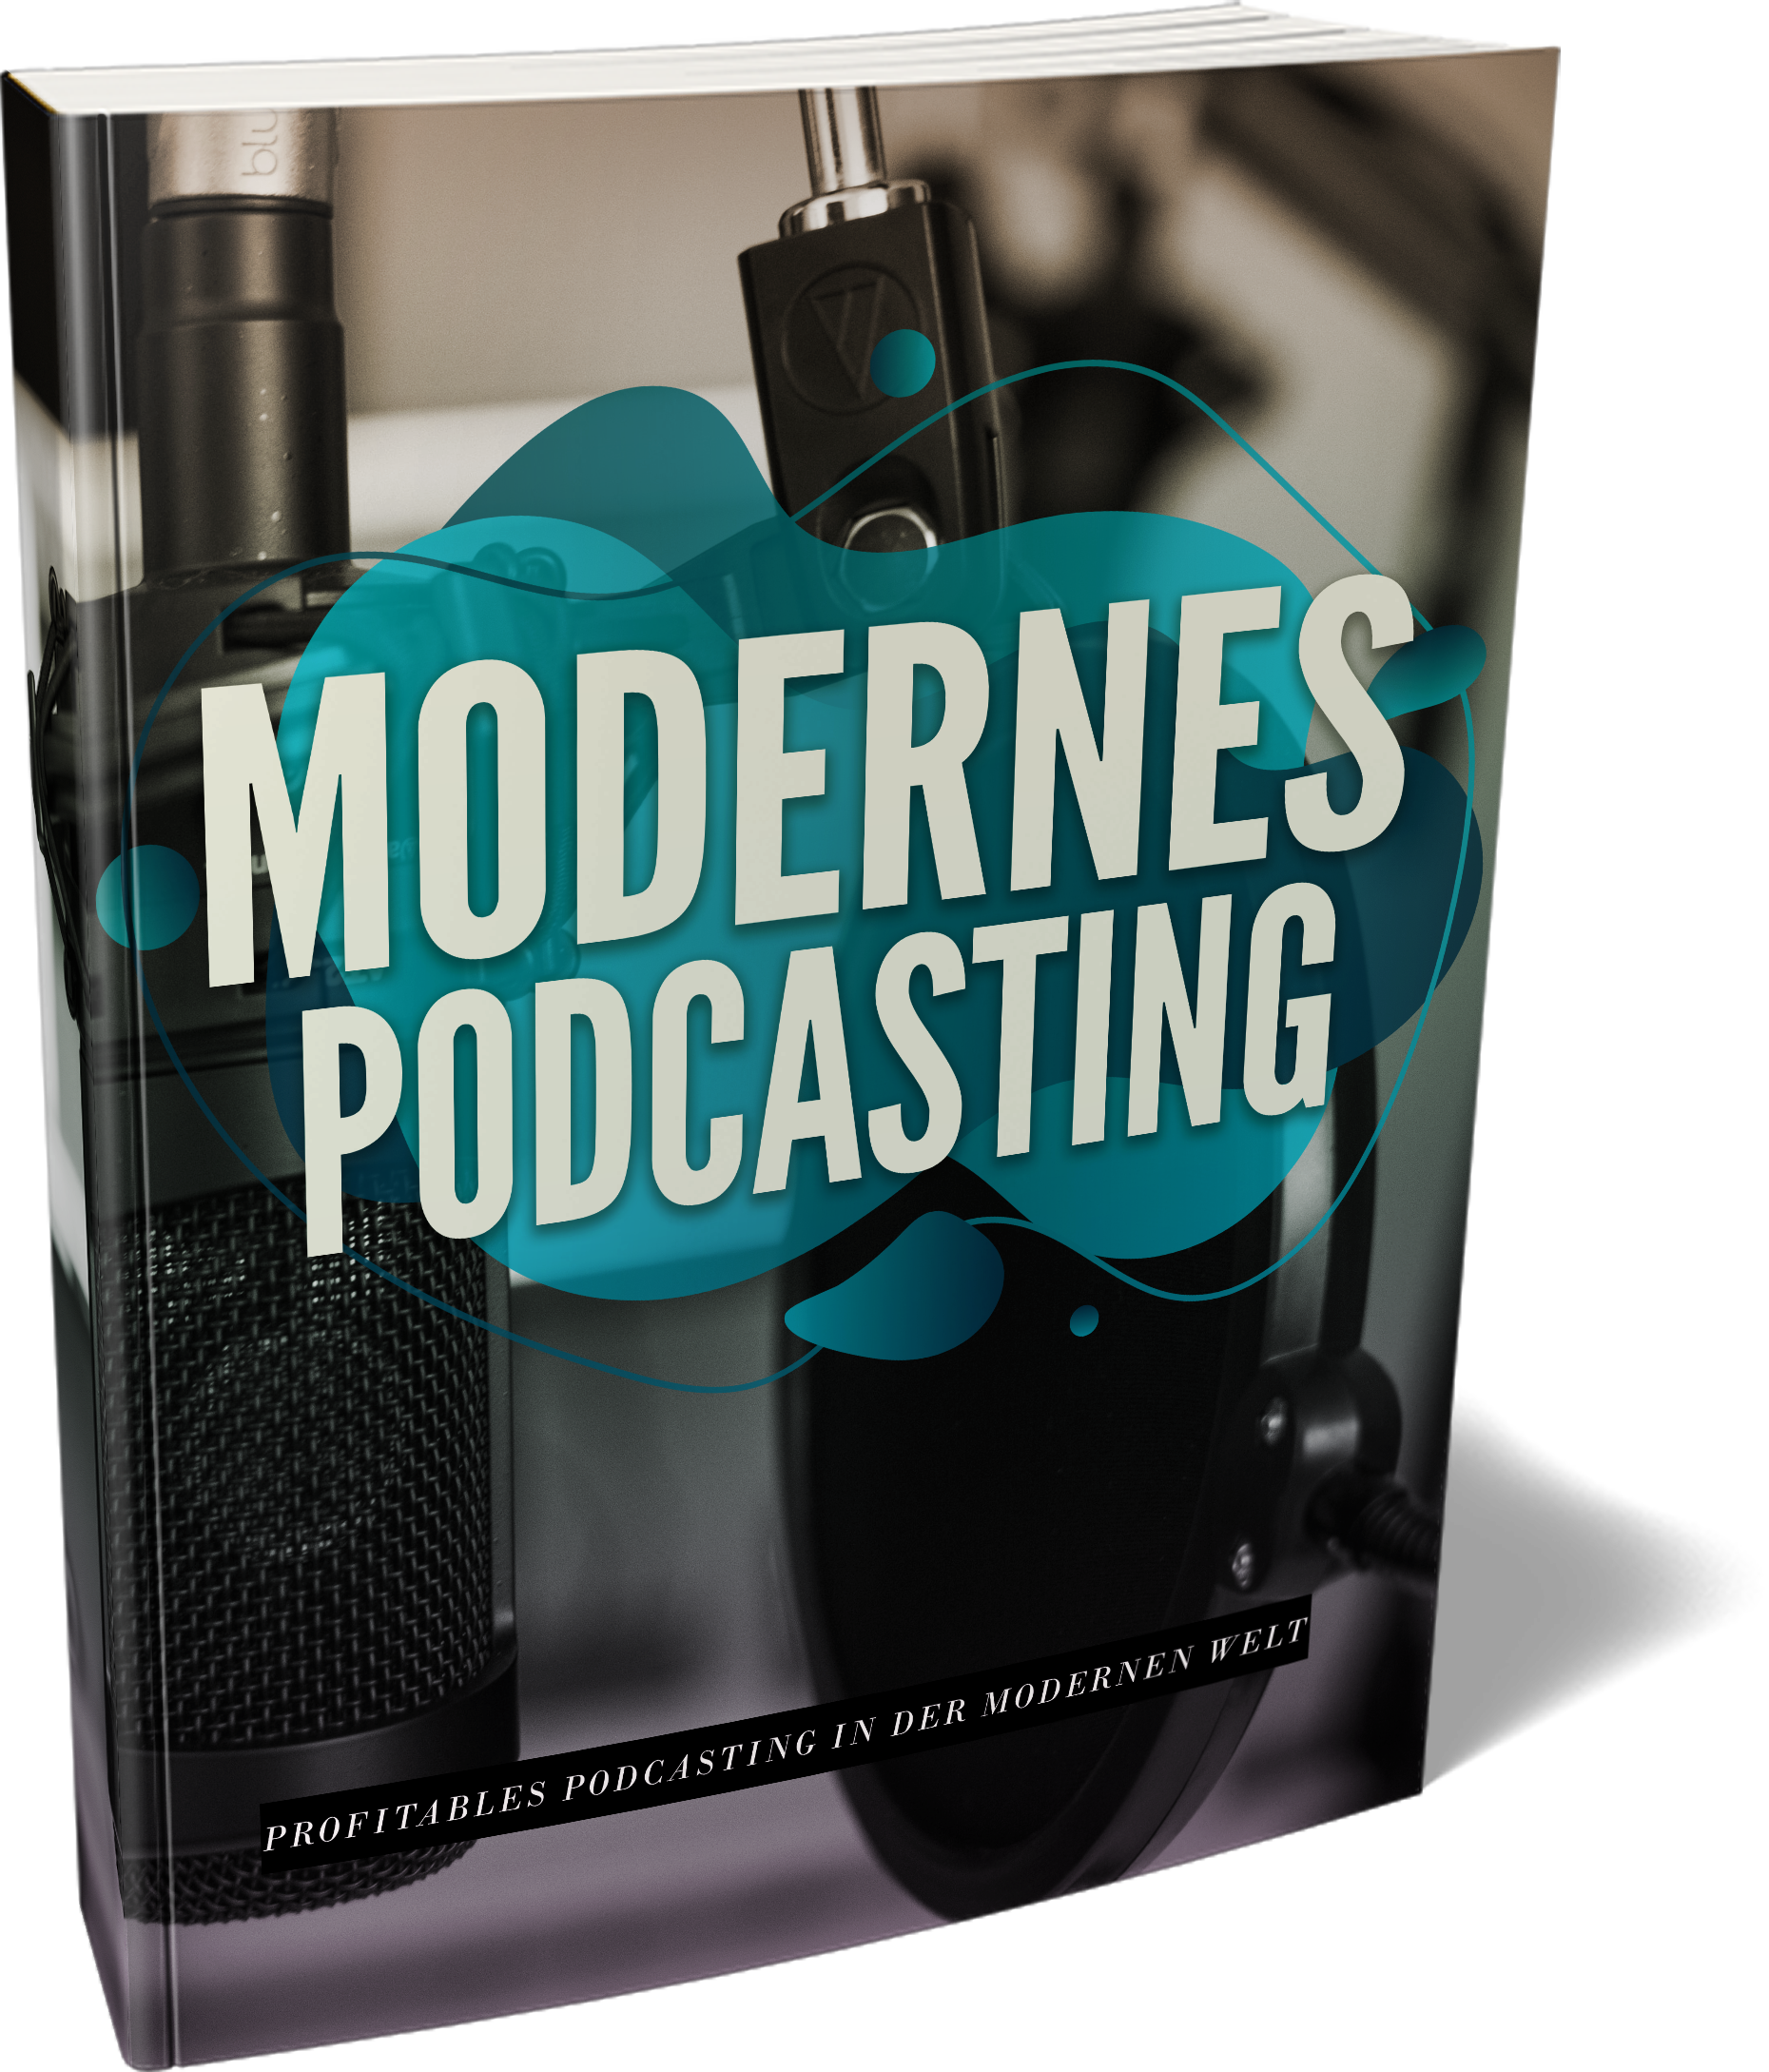 Modernes Podcasting